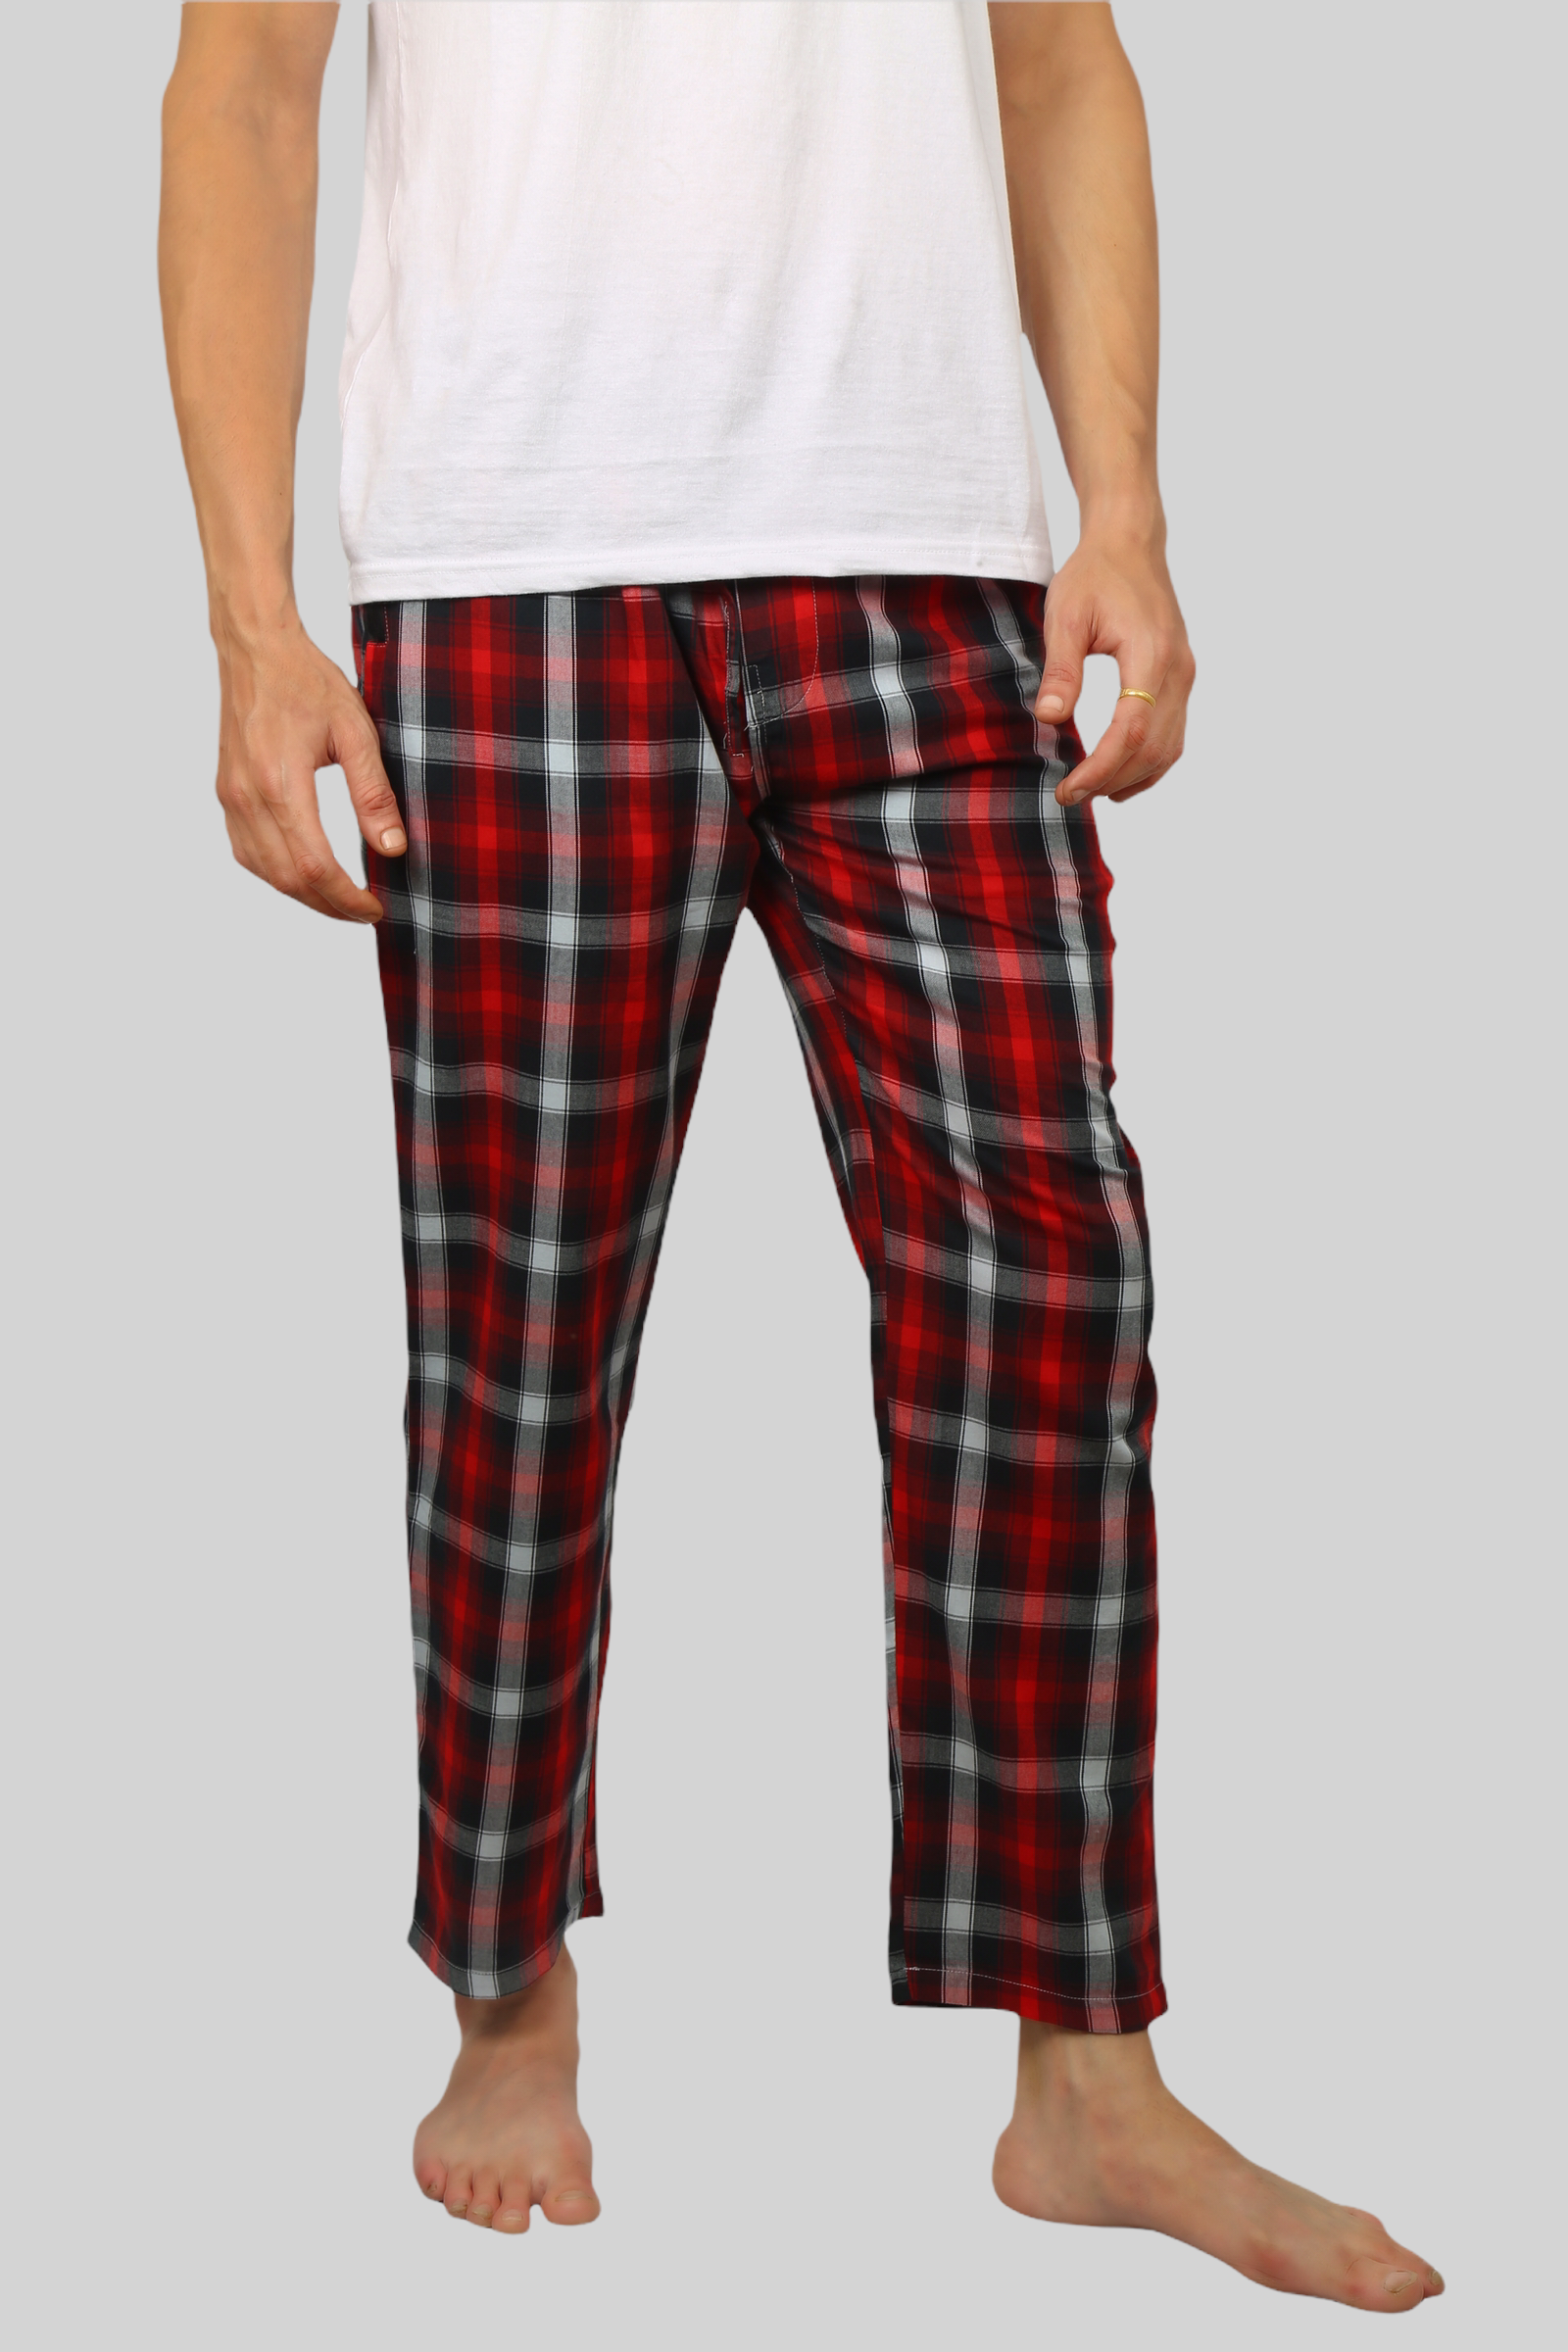 NWT Old Navy Red White Plaid Tartan Flannel Pajama Pants Sleep Lounge Men L  XL | eBay